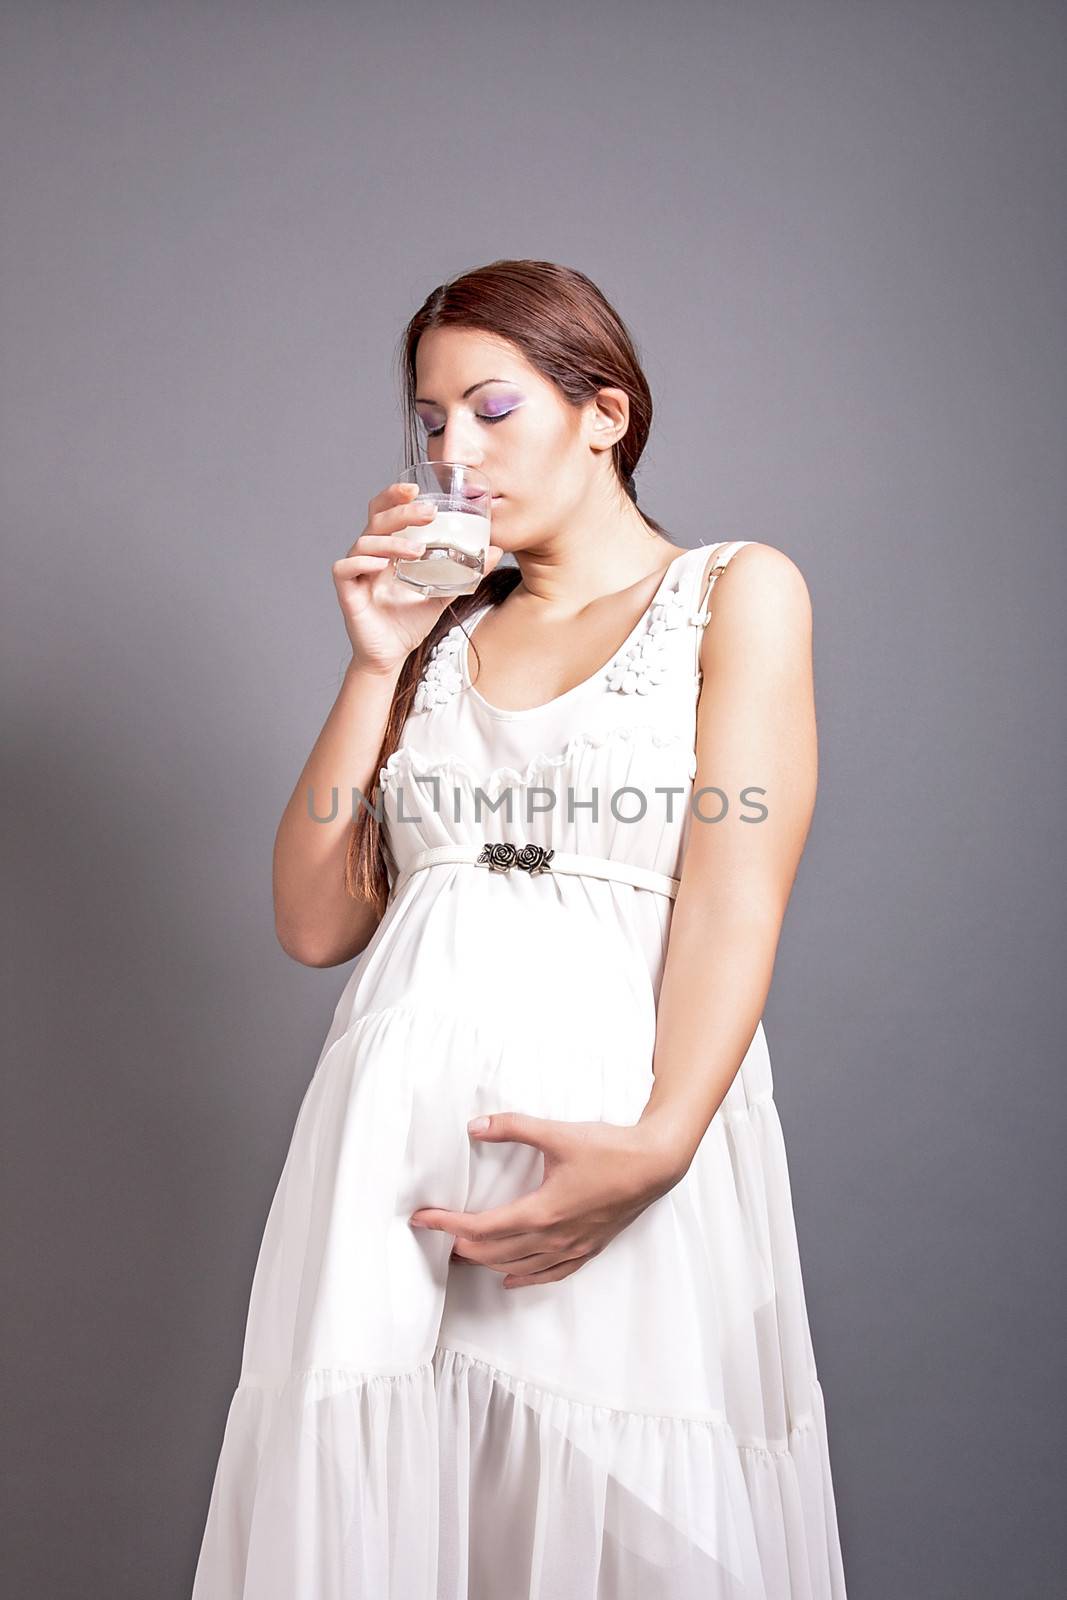 Pregnant woman drinking milk by dukibu